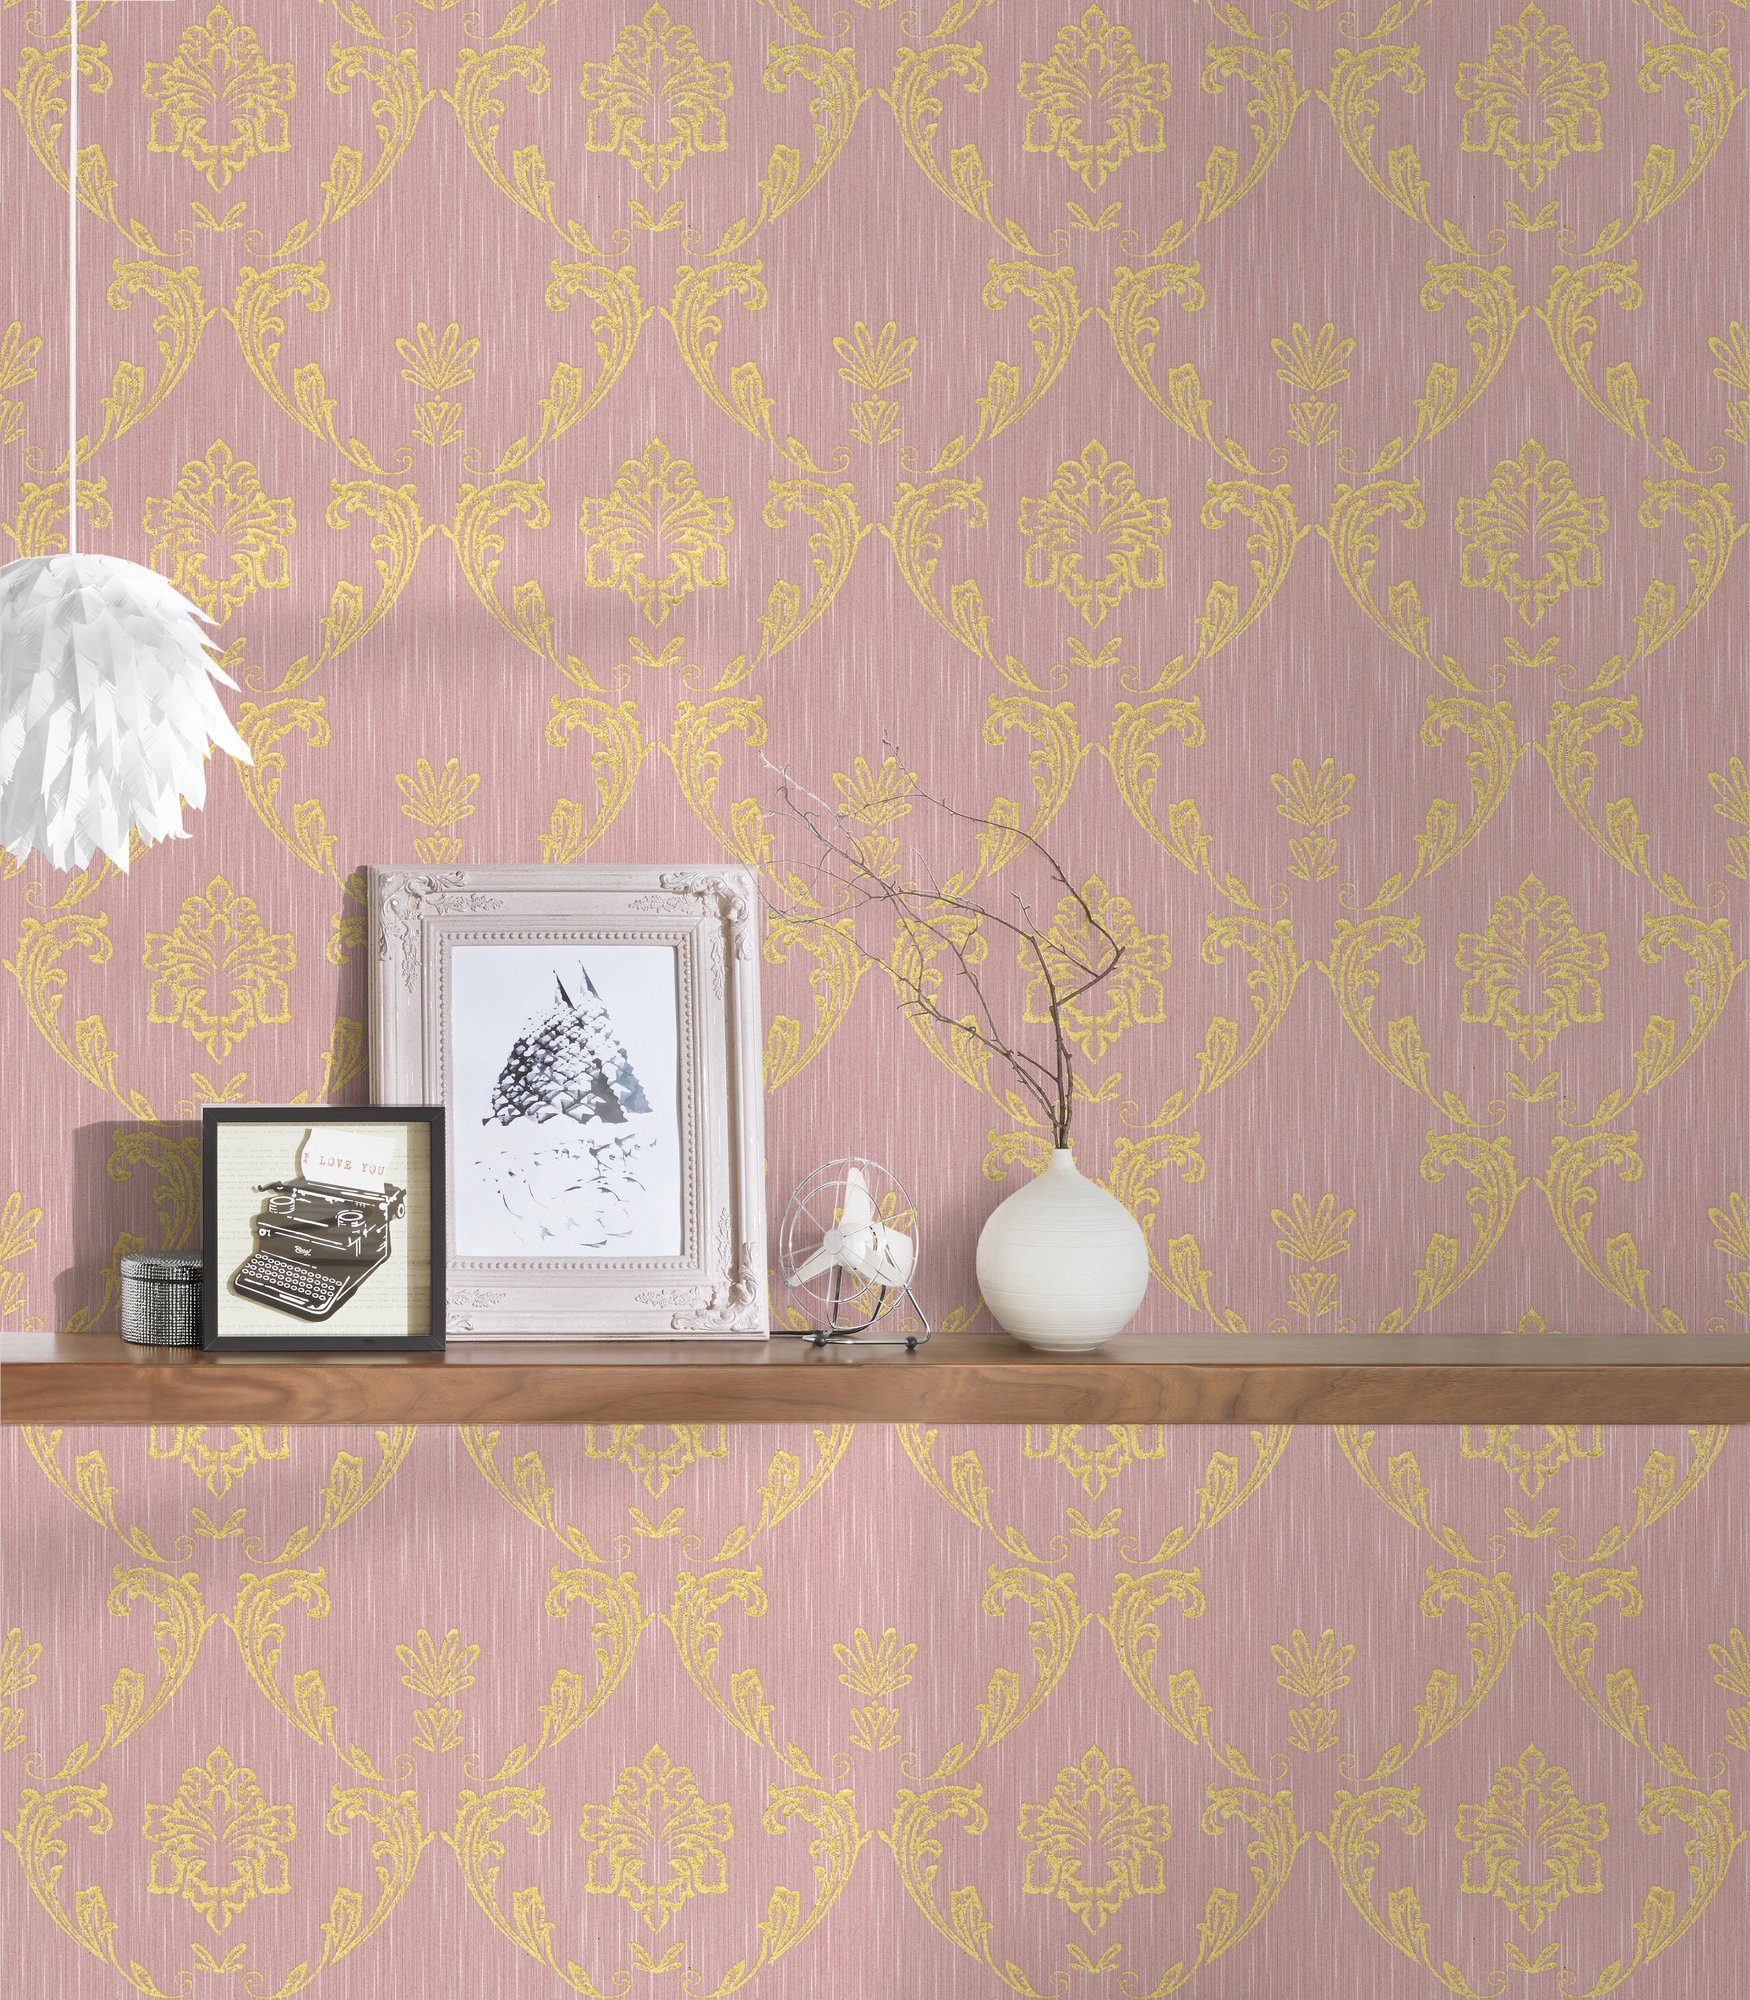 Silk, matt, Textiltapete Ornament Architects Création Metallic A.S. samtig, glänzend, Barock Tapete Barock, gold/rosa Paper